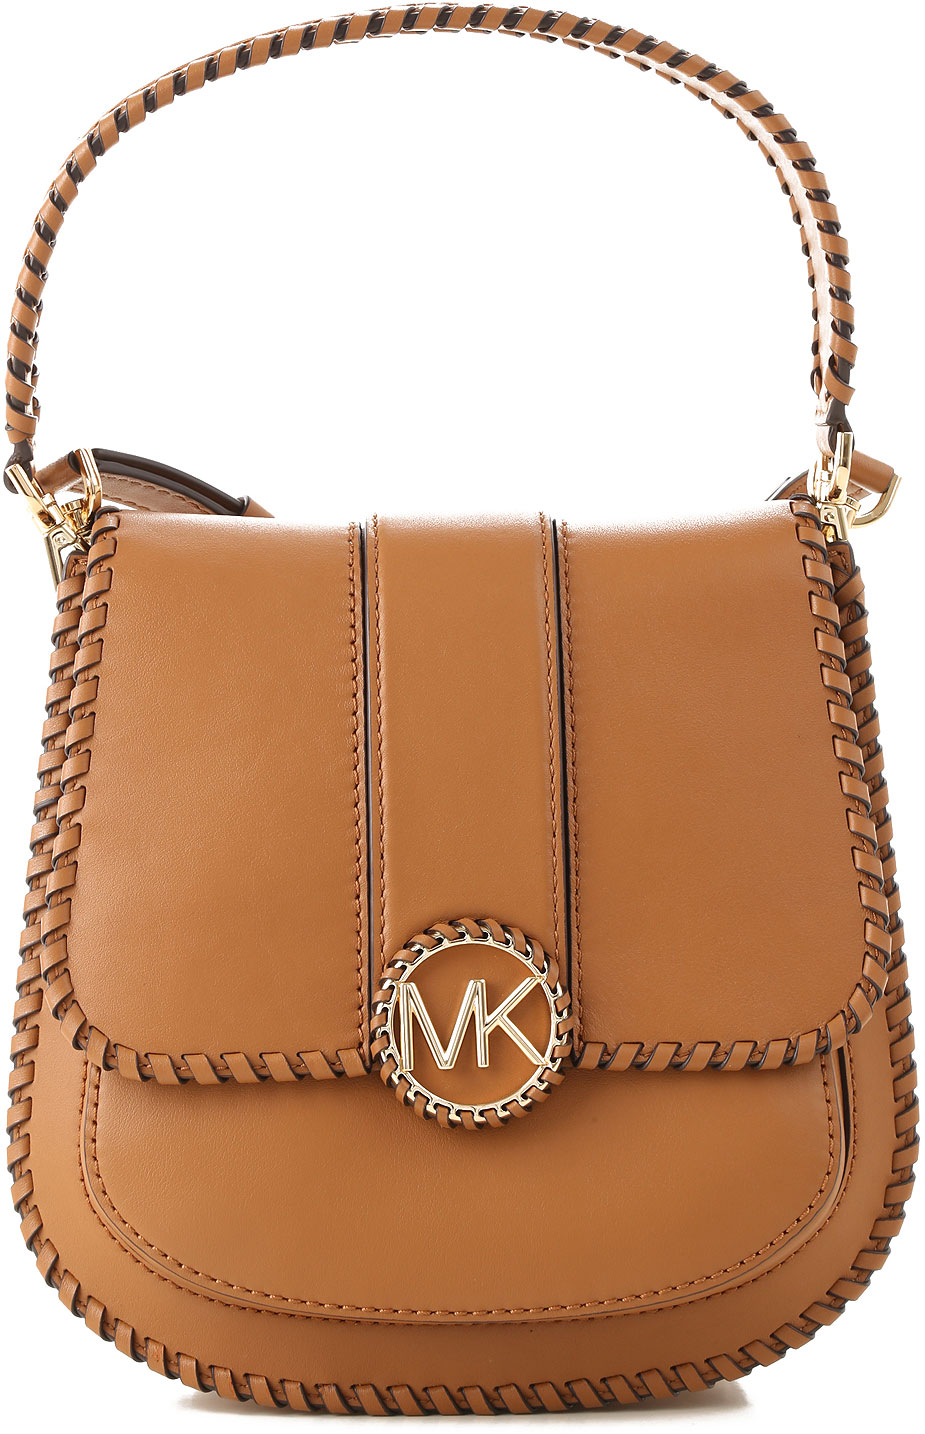 Handbags Michael Kors, Style code: 30f8g0cm2l-marigold-